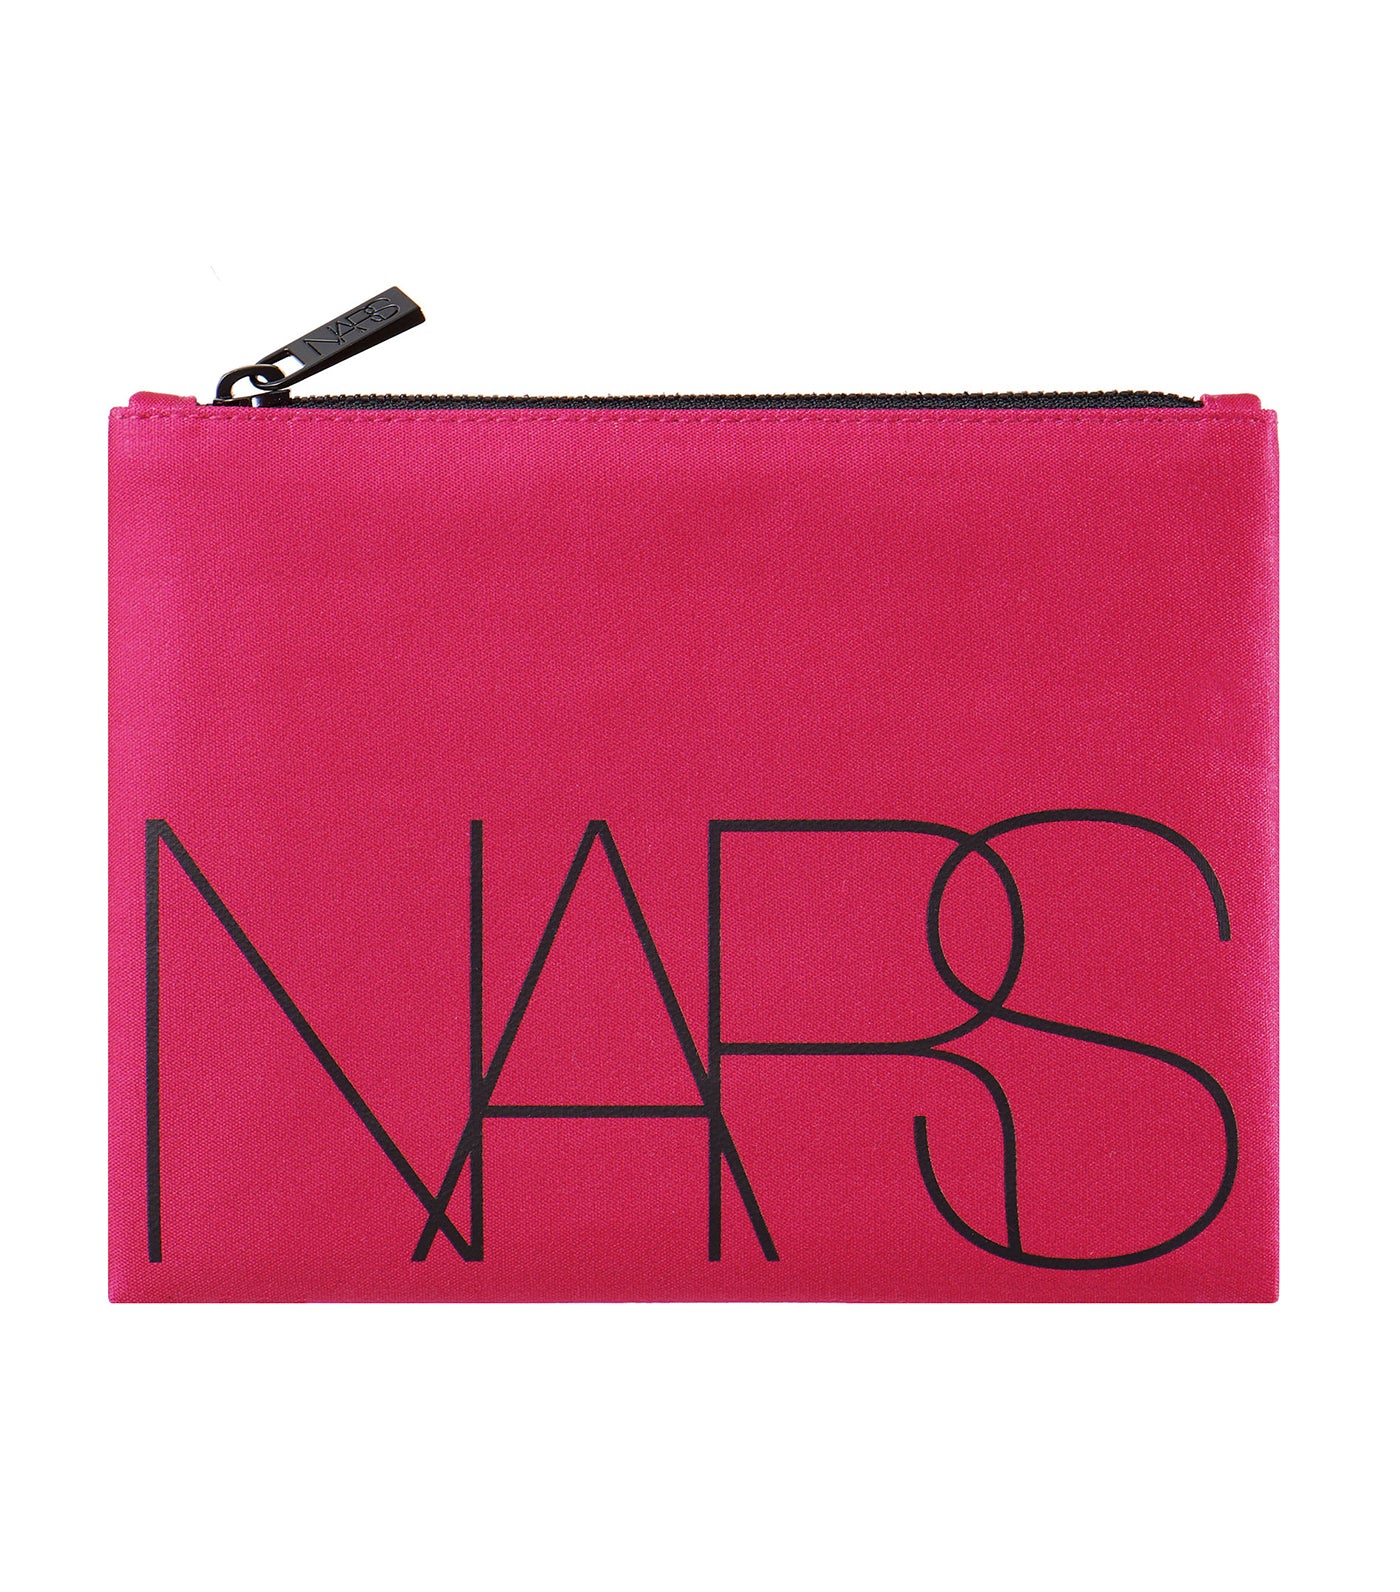 Stylish NARS Metallic Cosmetic Bag